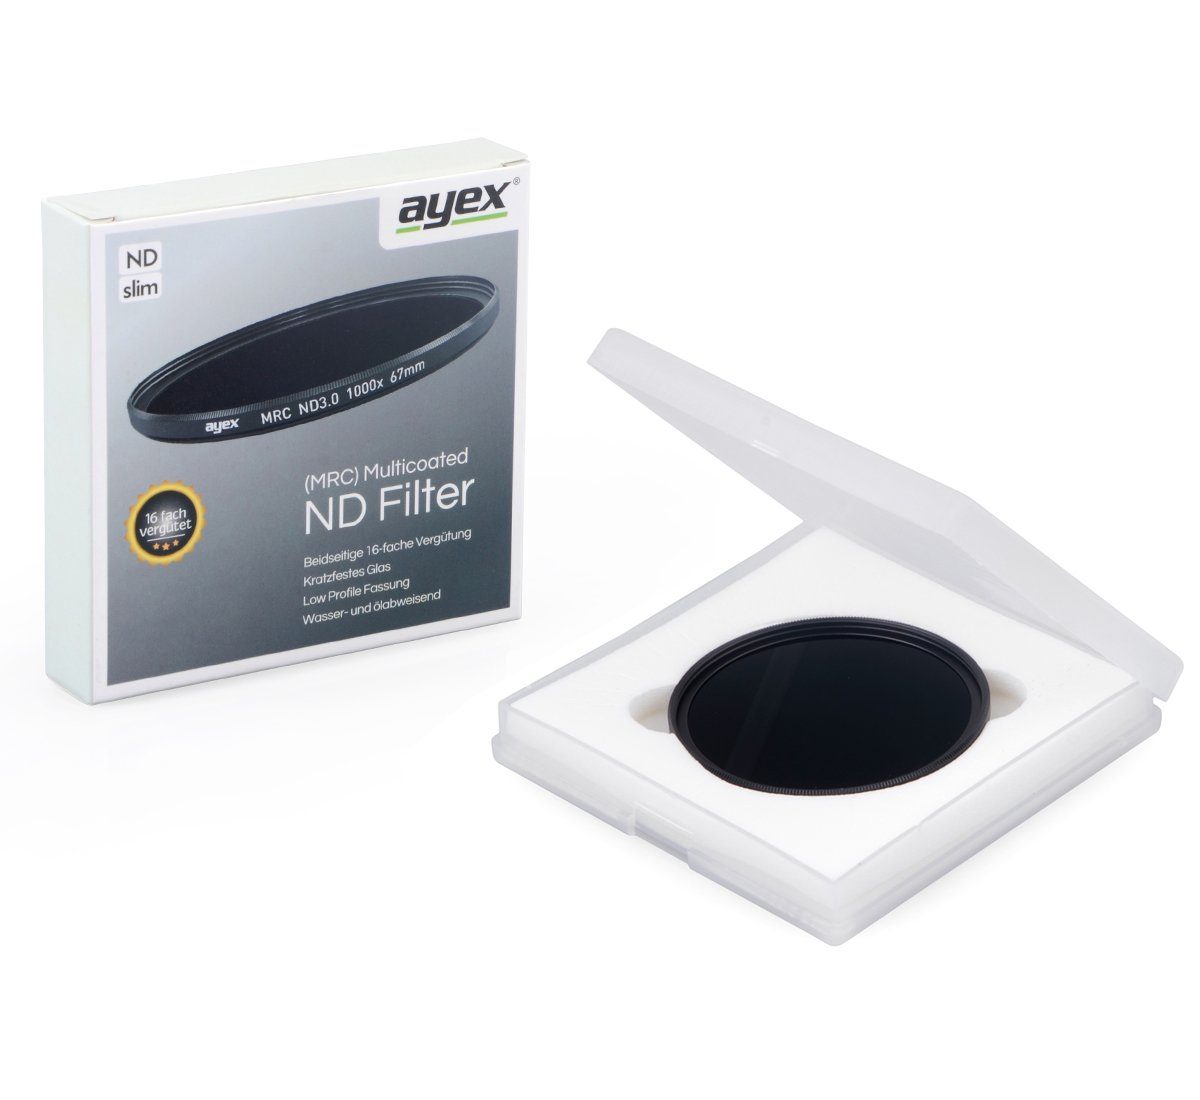 ayex MRC Neutral Density Filter 58mm Multicoated ND1000x Graufilter Slim ND3.0